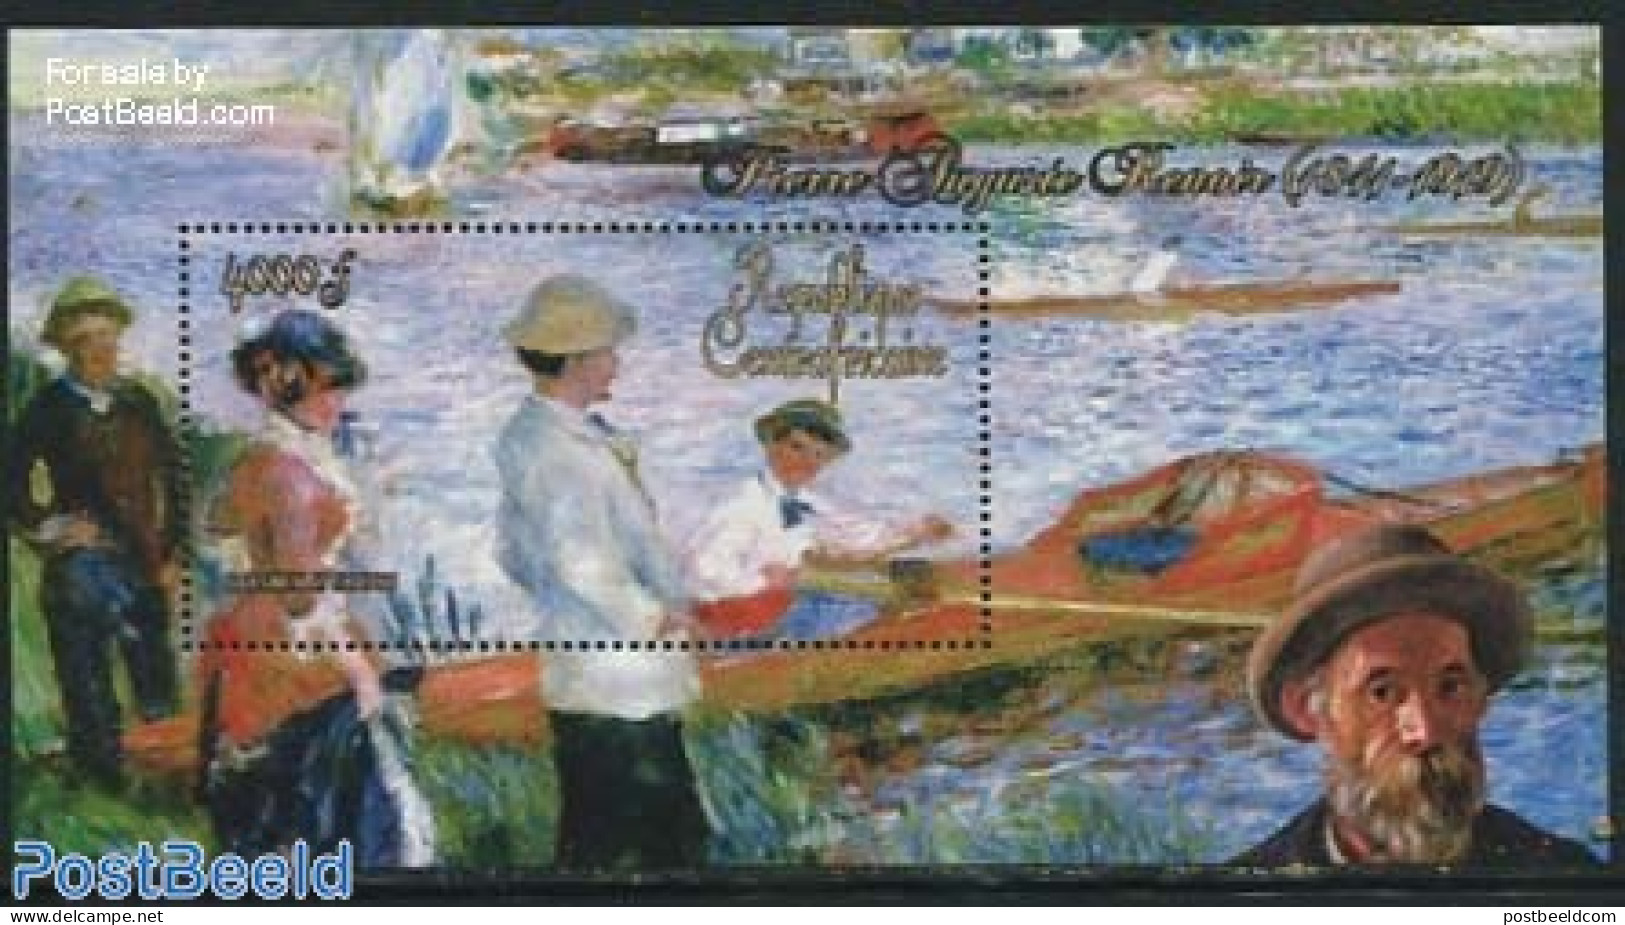 Central Africa 2011 Renoir Painting S/s, Mint NH, Art - Modern Art (1850-present) - Paintings - Zentralafrik. Republik